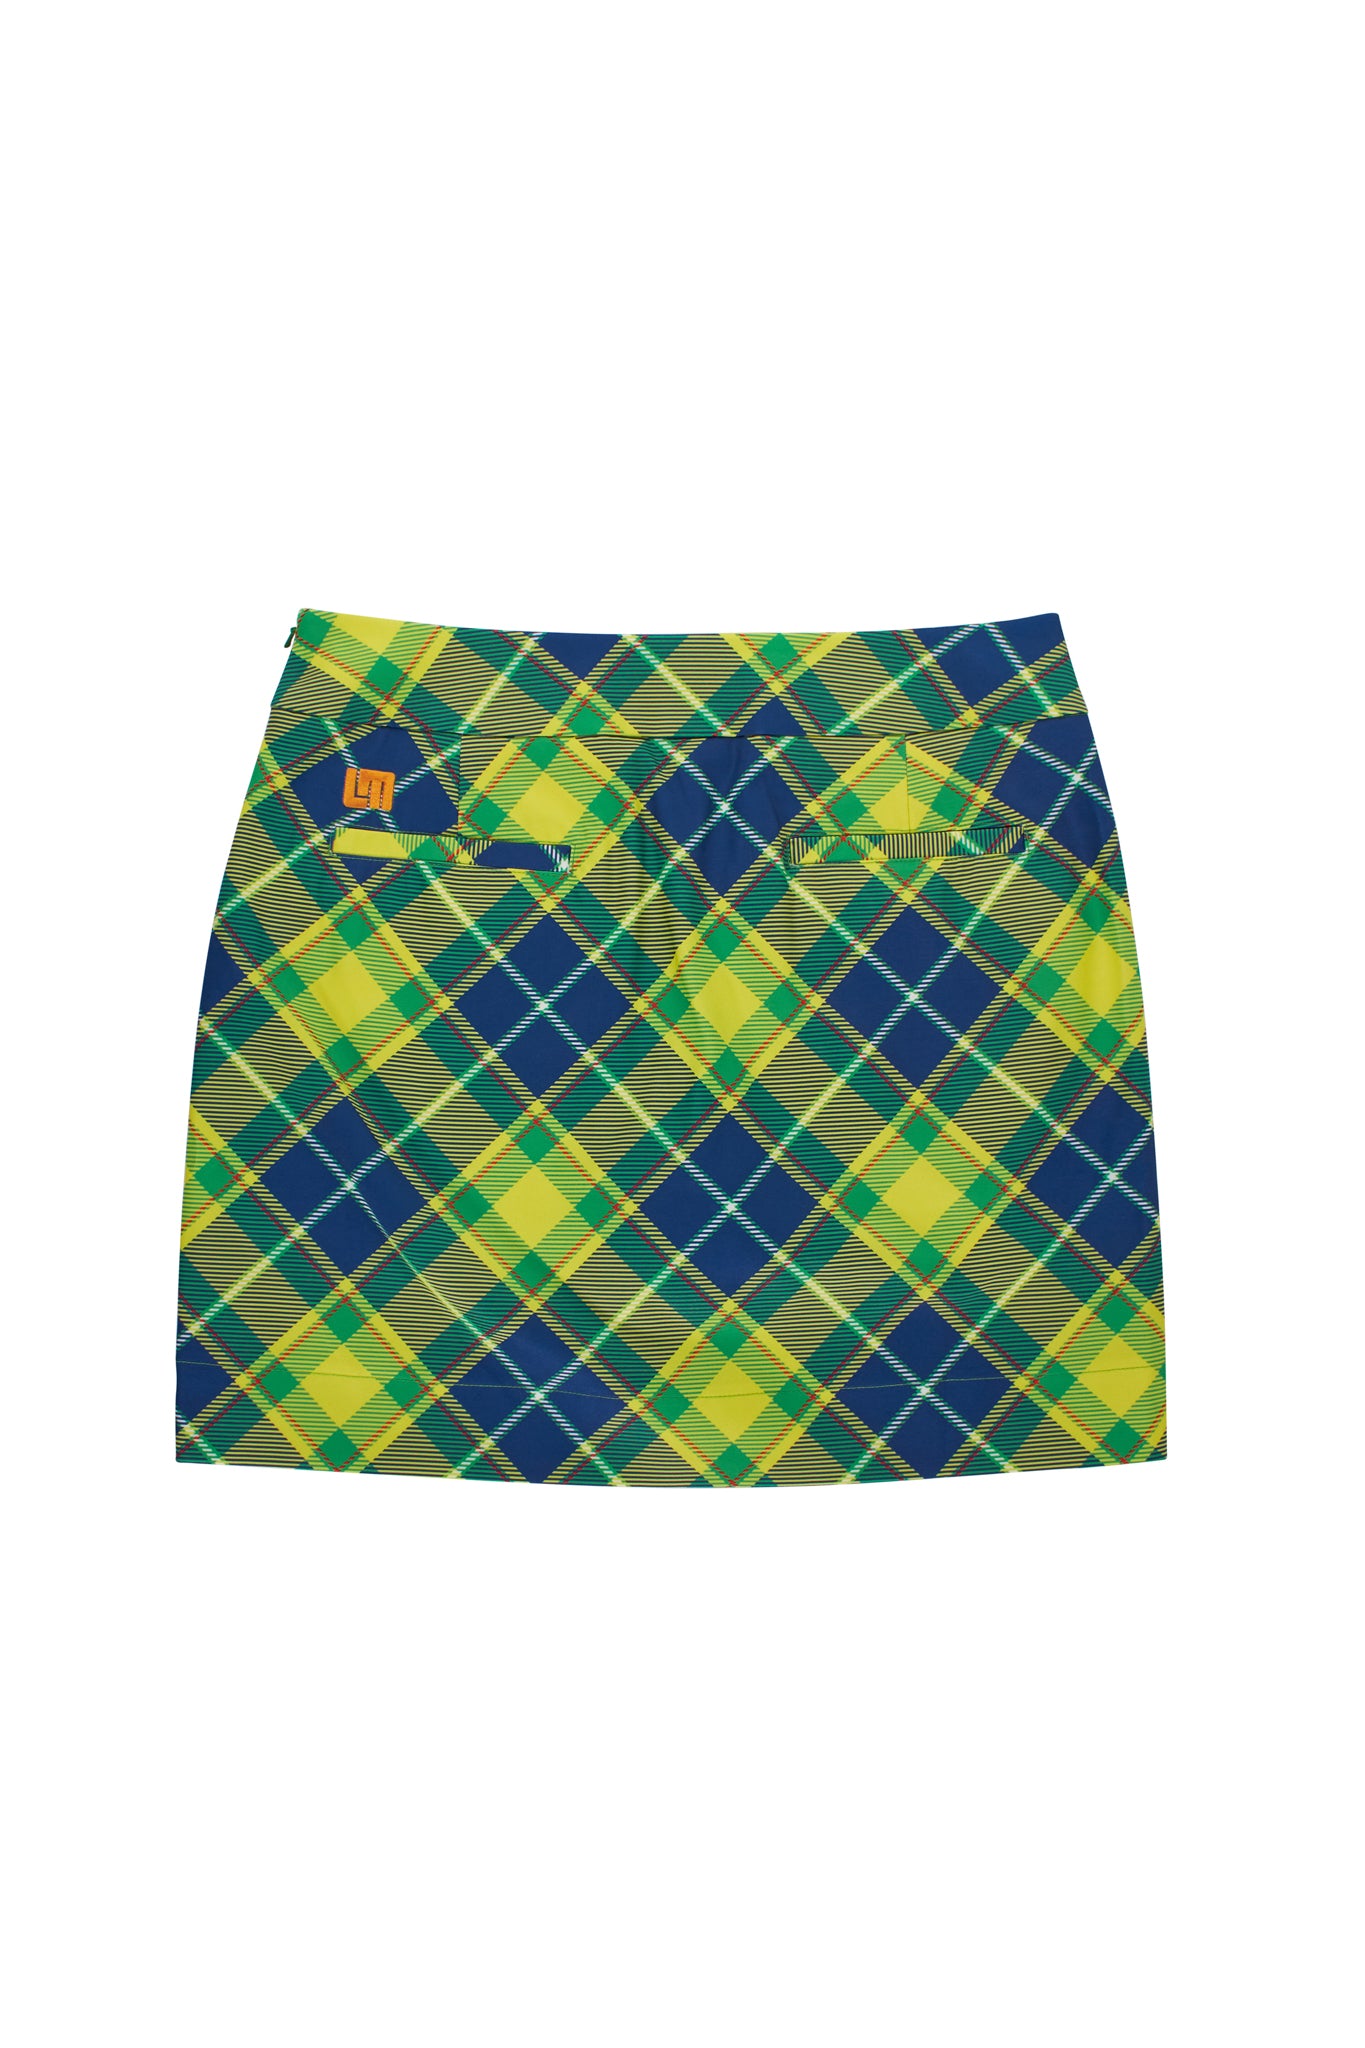 LOUDMOUTH Golf navy skirt pantsスカート